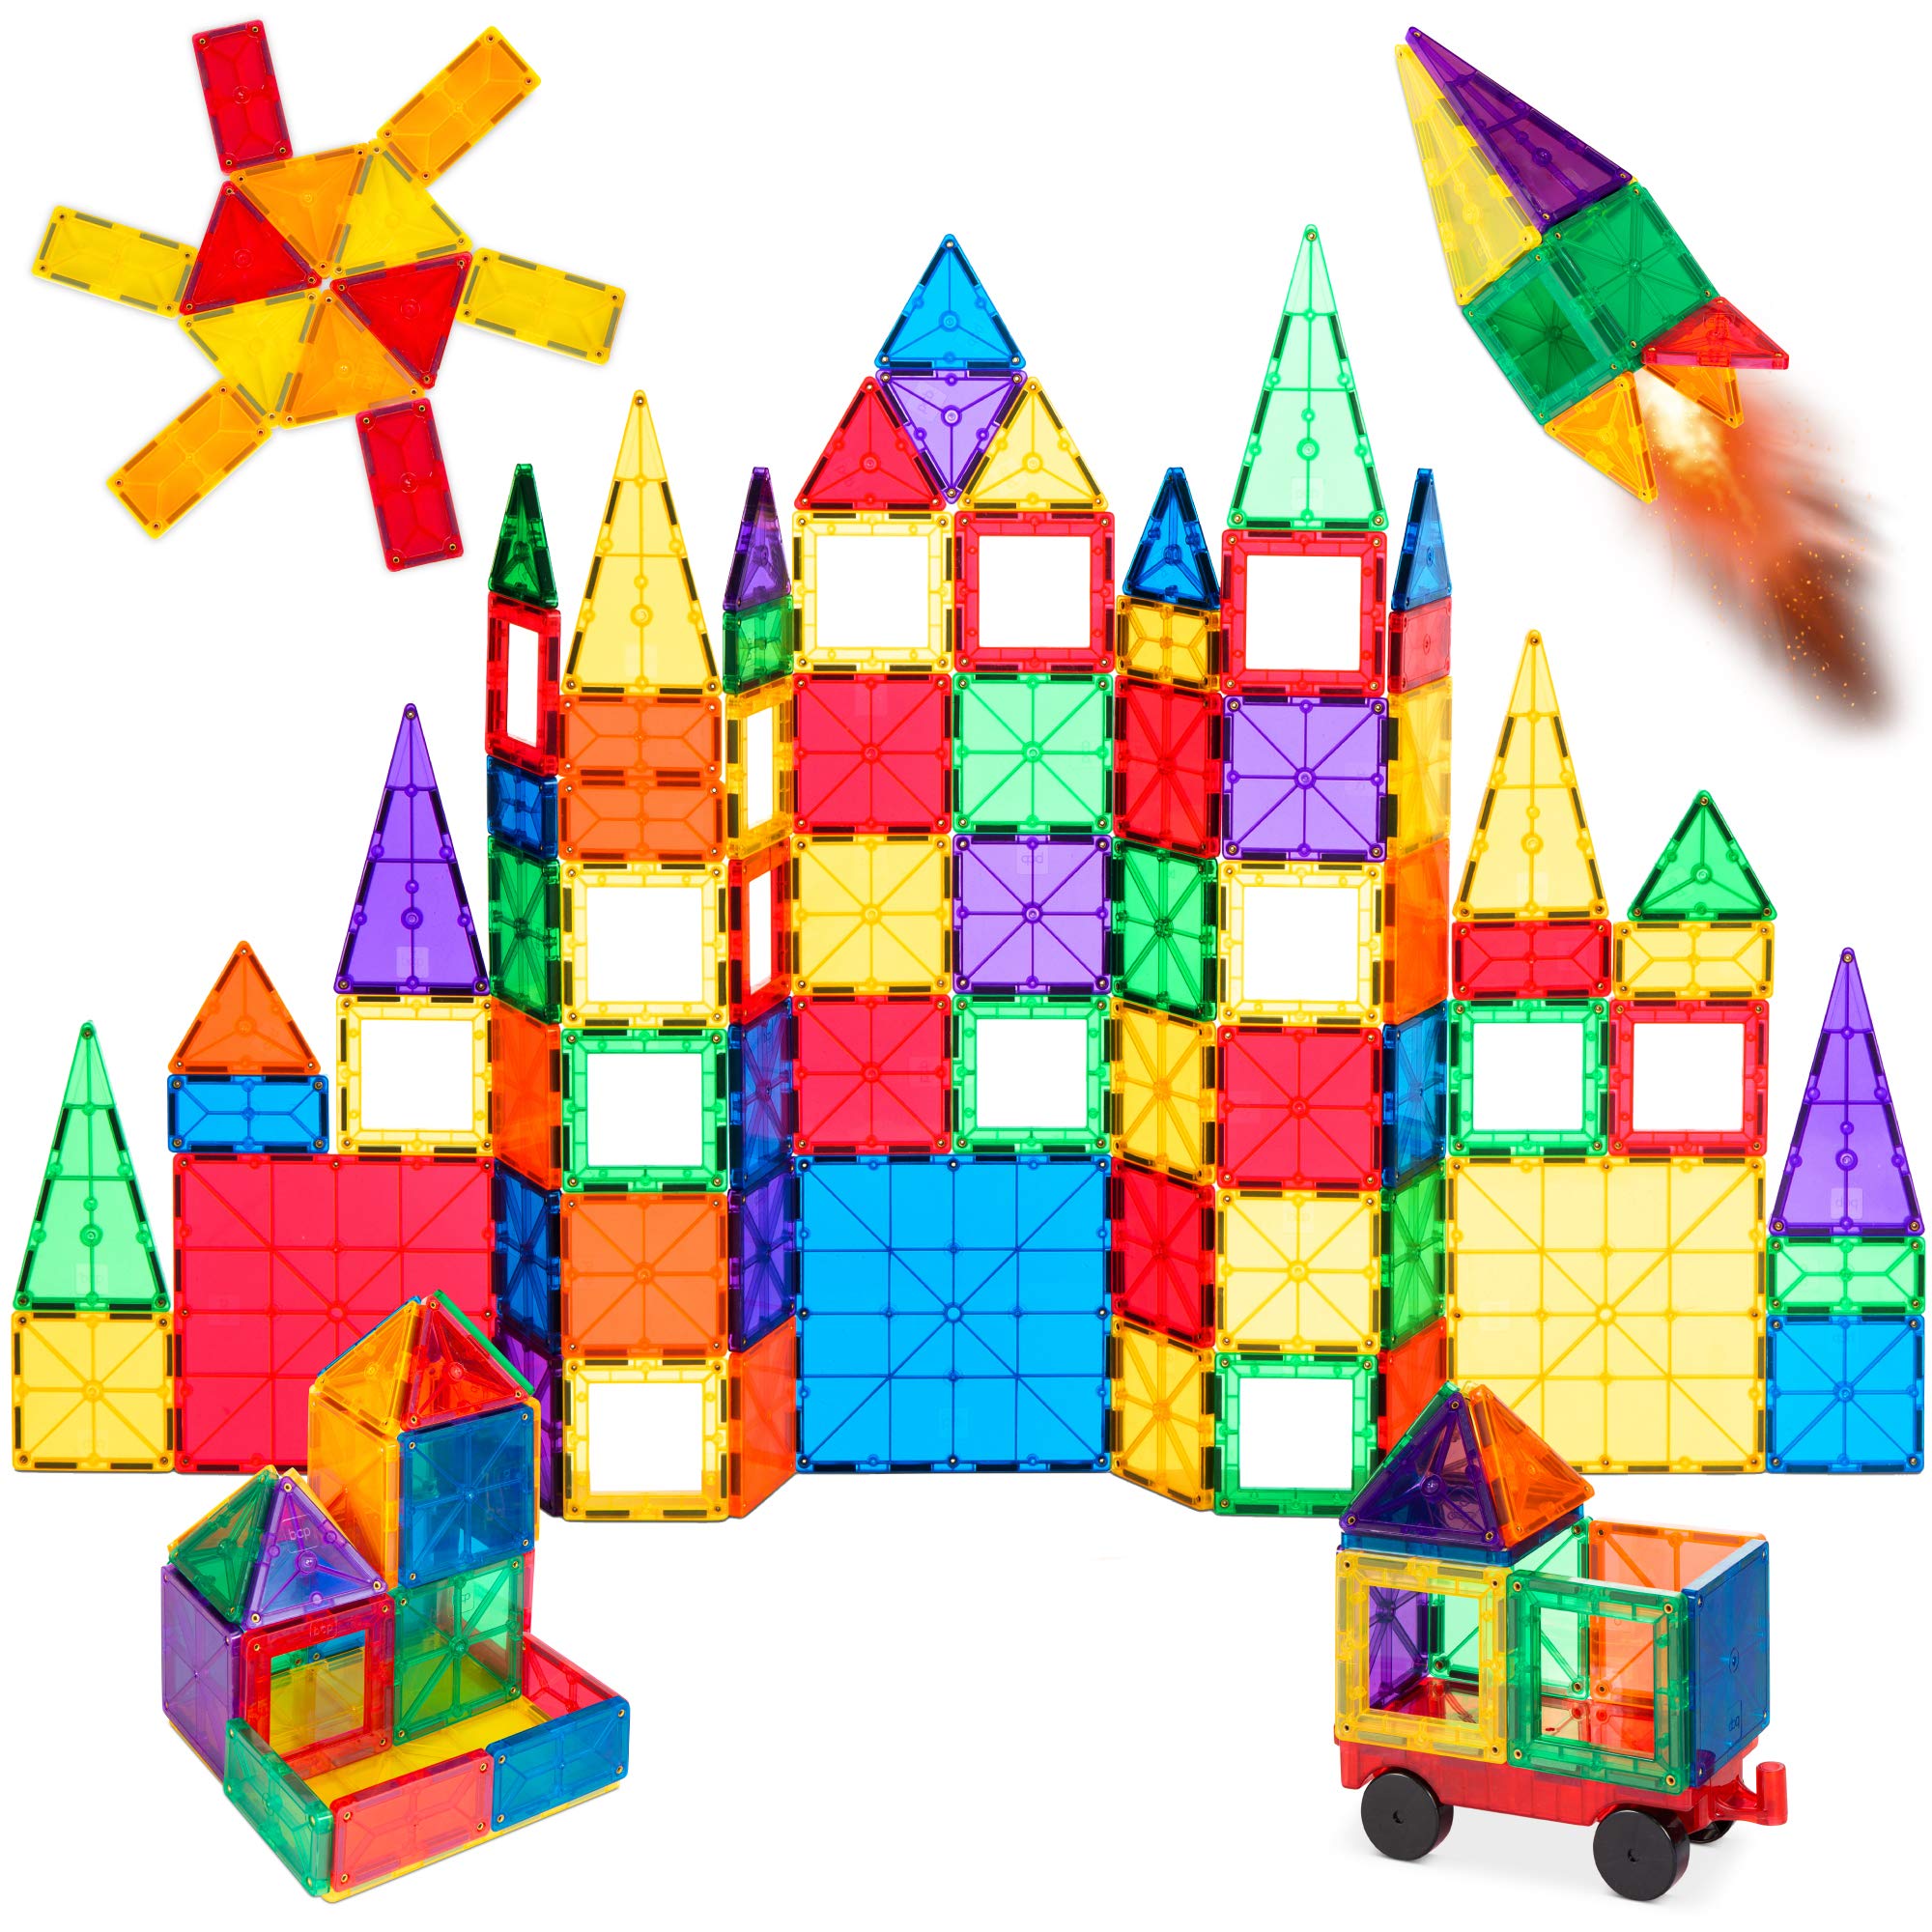 Best Choice Products 110-Piece Kids Colorful Magnetic Tiles Set 3D Construction Magnet Building Blocks Educational STEM Toy w